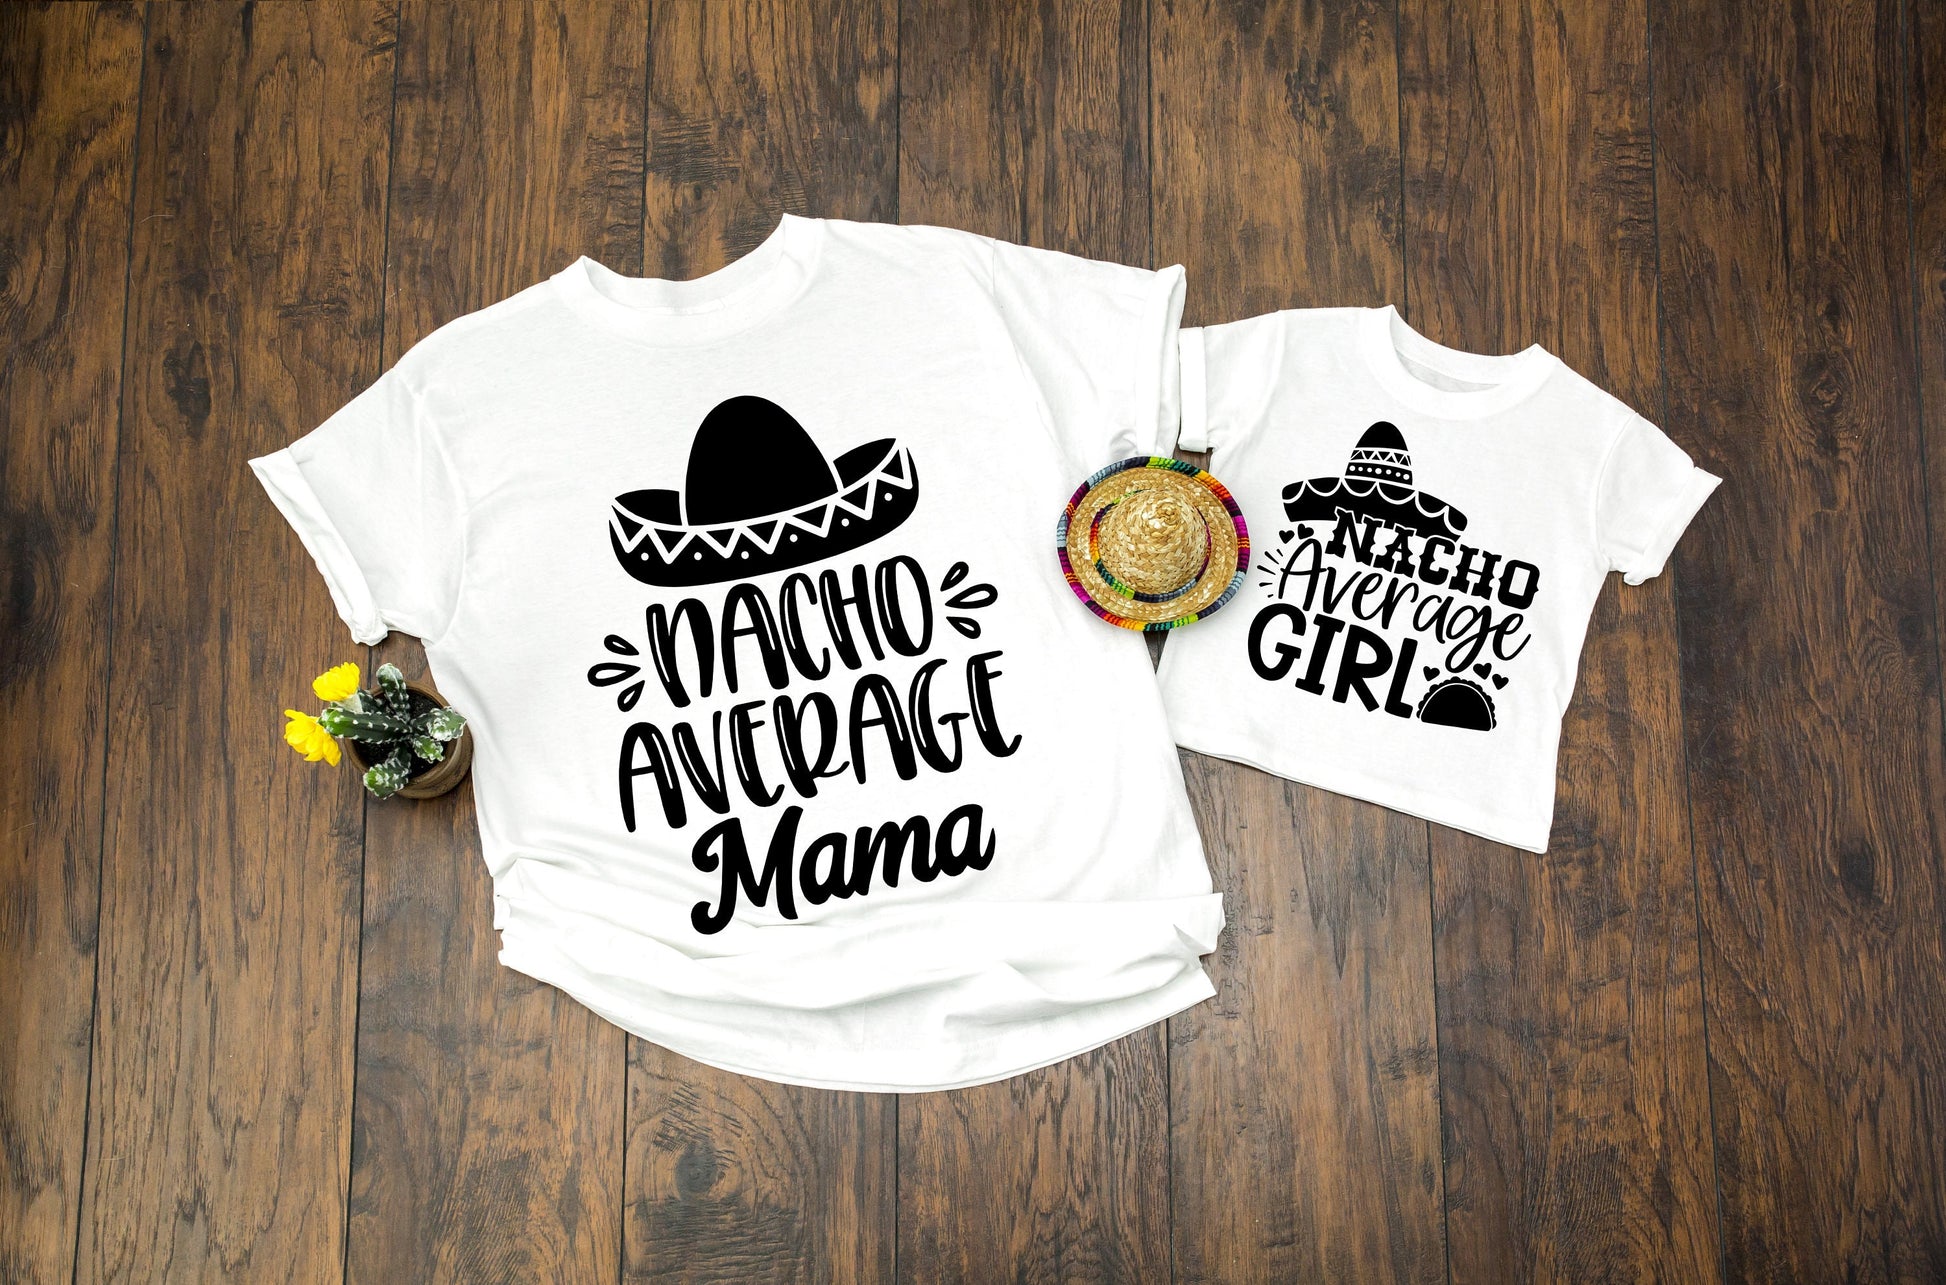 Nacho Average MOM shirt, Cinco De Mayo Shirt print template